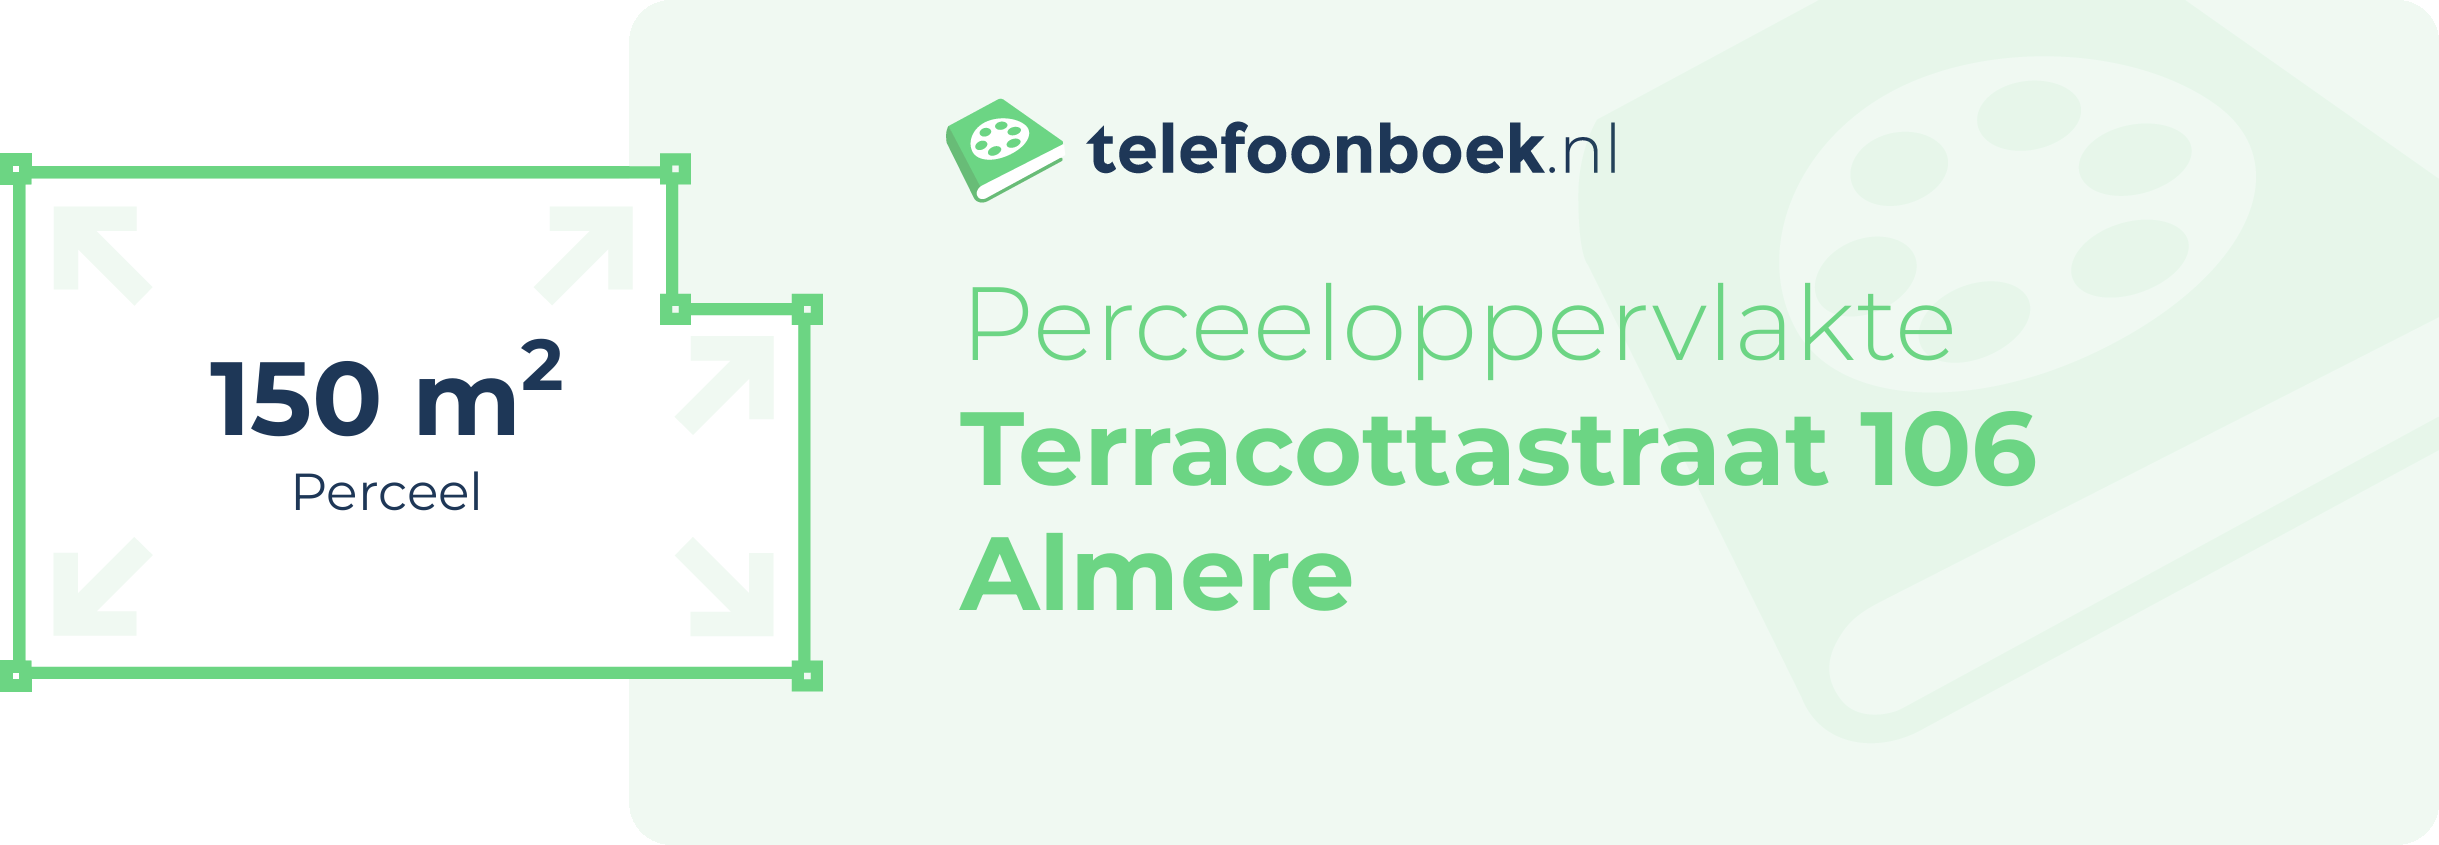 Perceeloppervlakte Terracottastraat 106 Almere